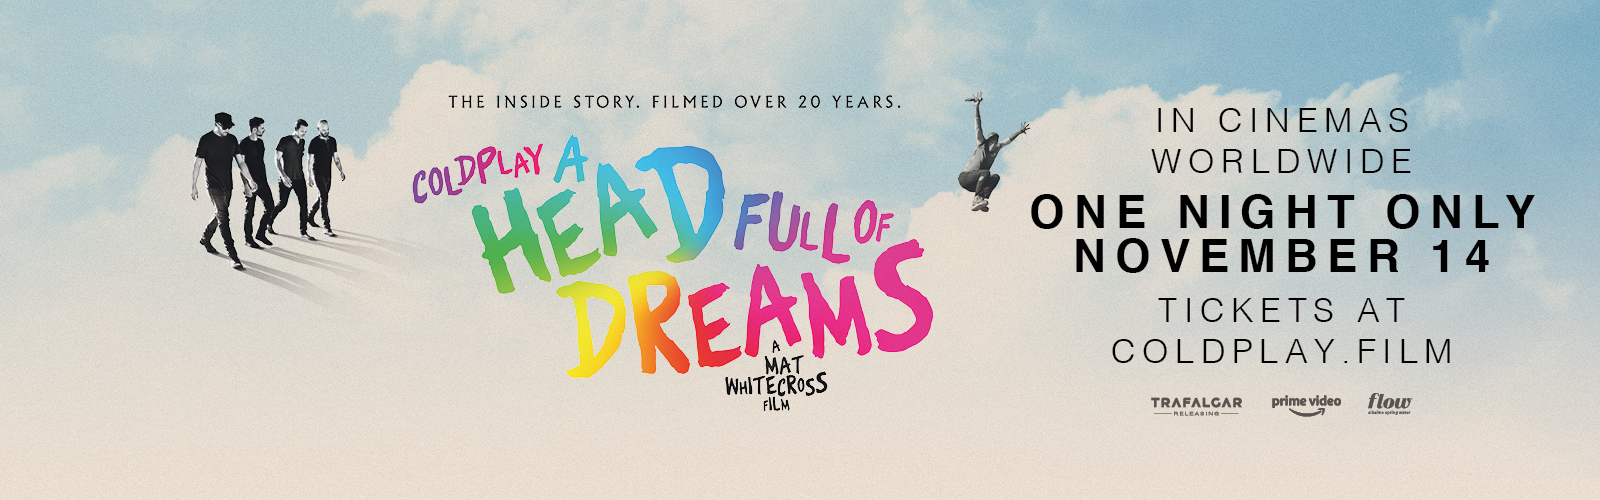 Coldplay A Head Full Of Dreams poster (Trafalgar Releasing/Amazon)